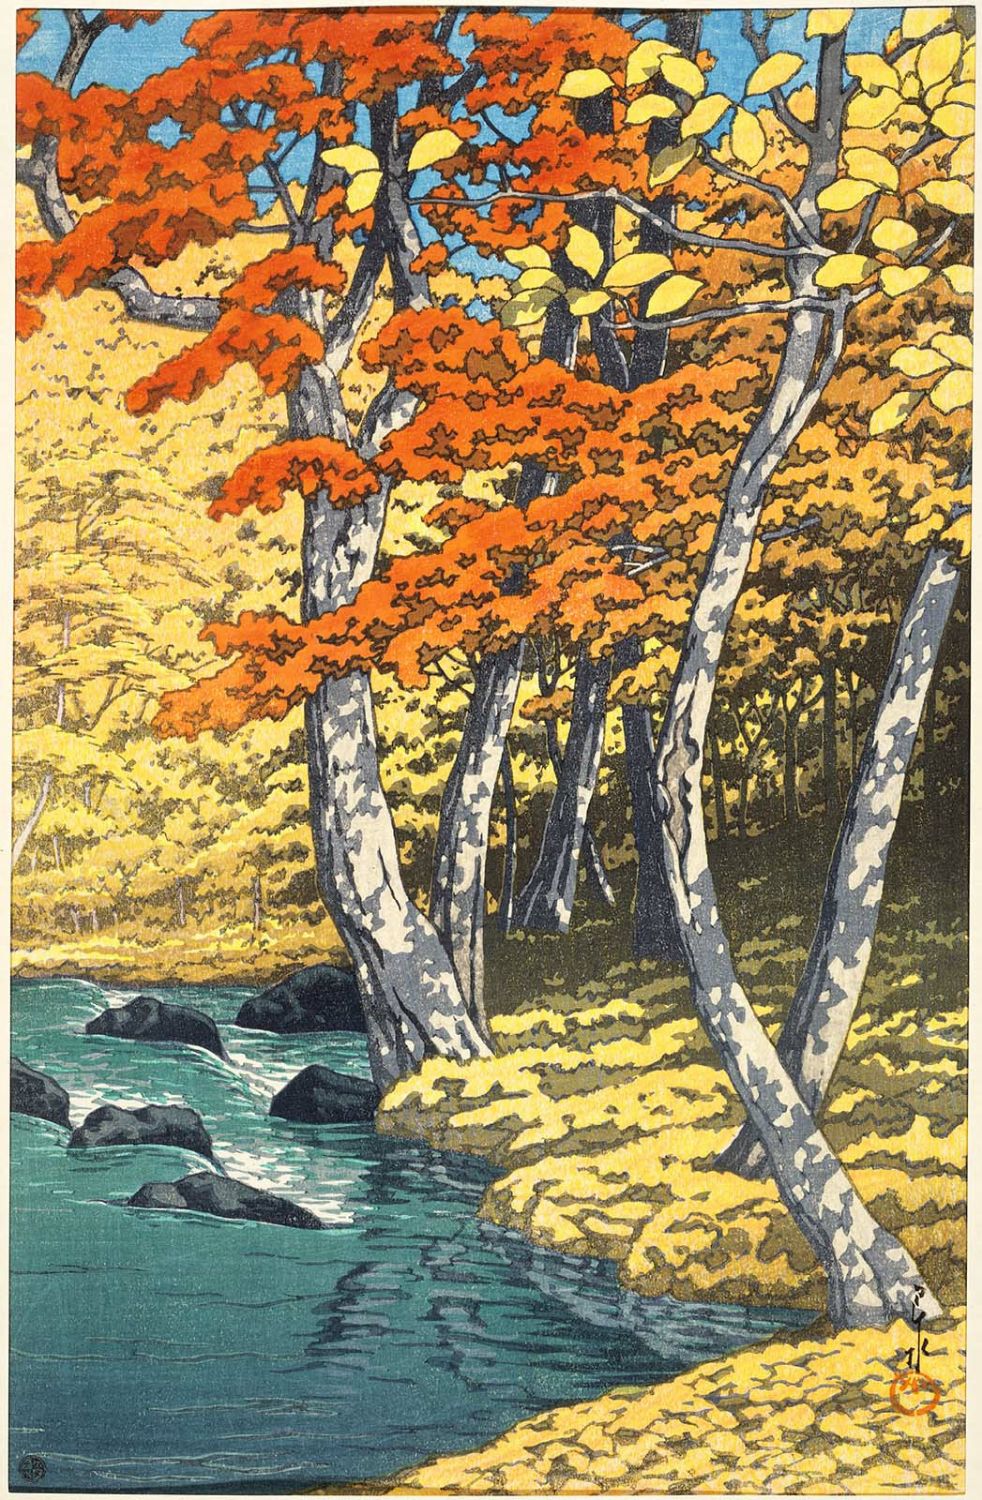 Autumn at Oirase by Hasui Kawase - 1933 - 36.51 × 24.13 cm Minneapolis Institute of Art